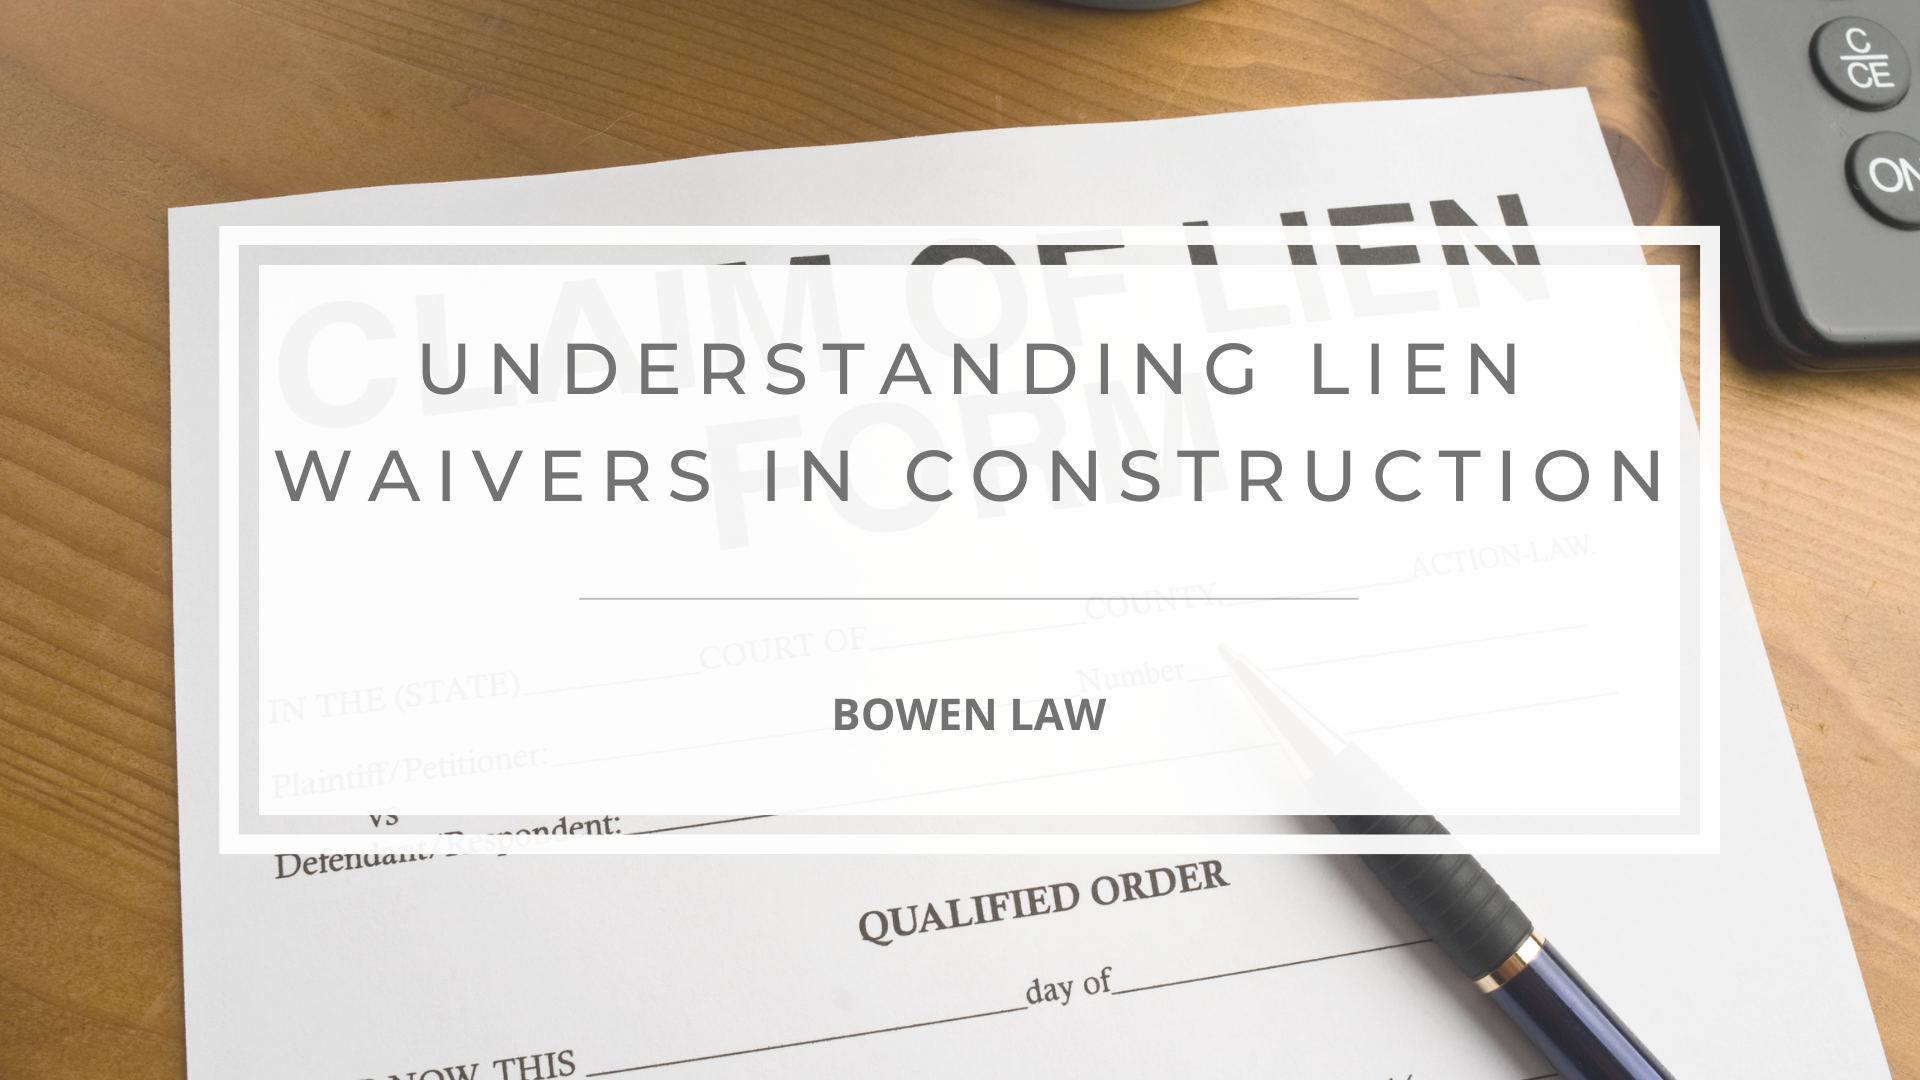 Featured image of understanding lien waivers in construction